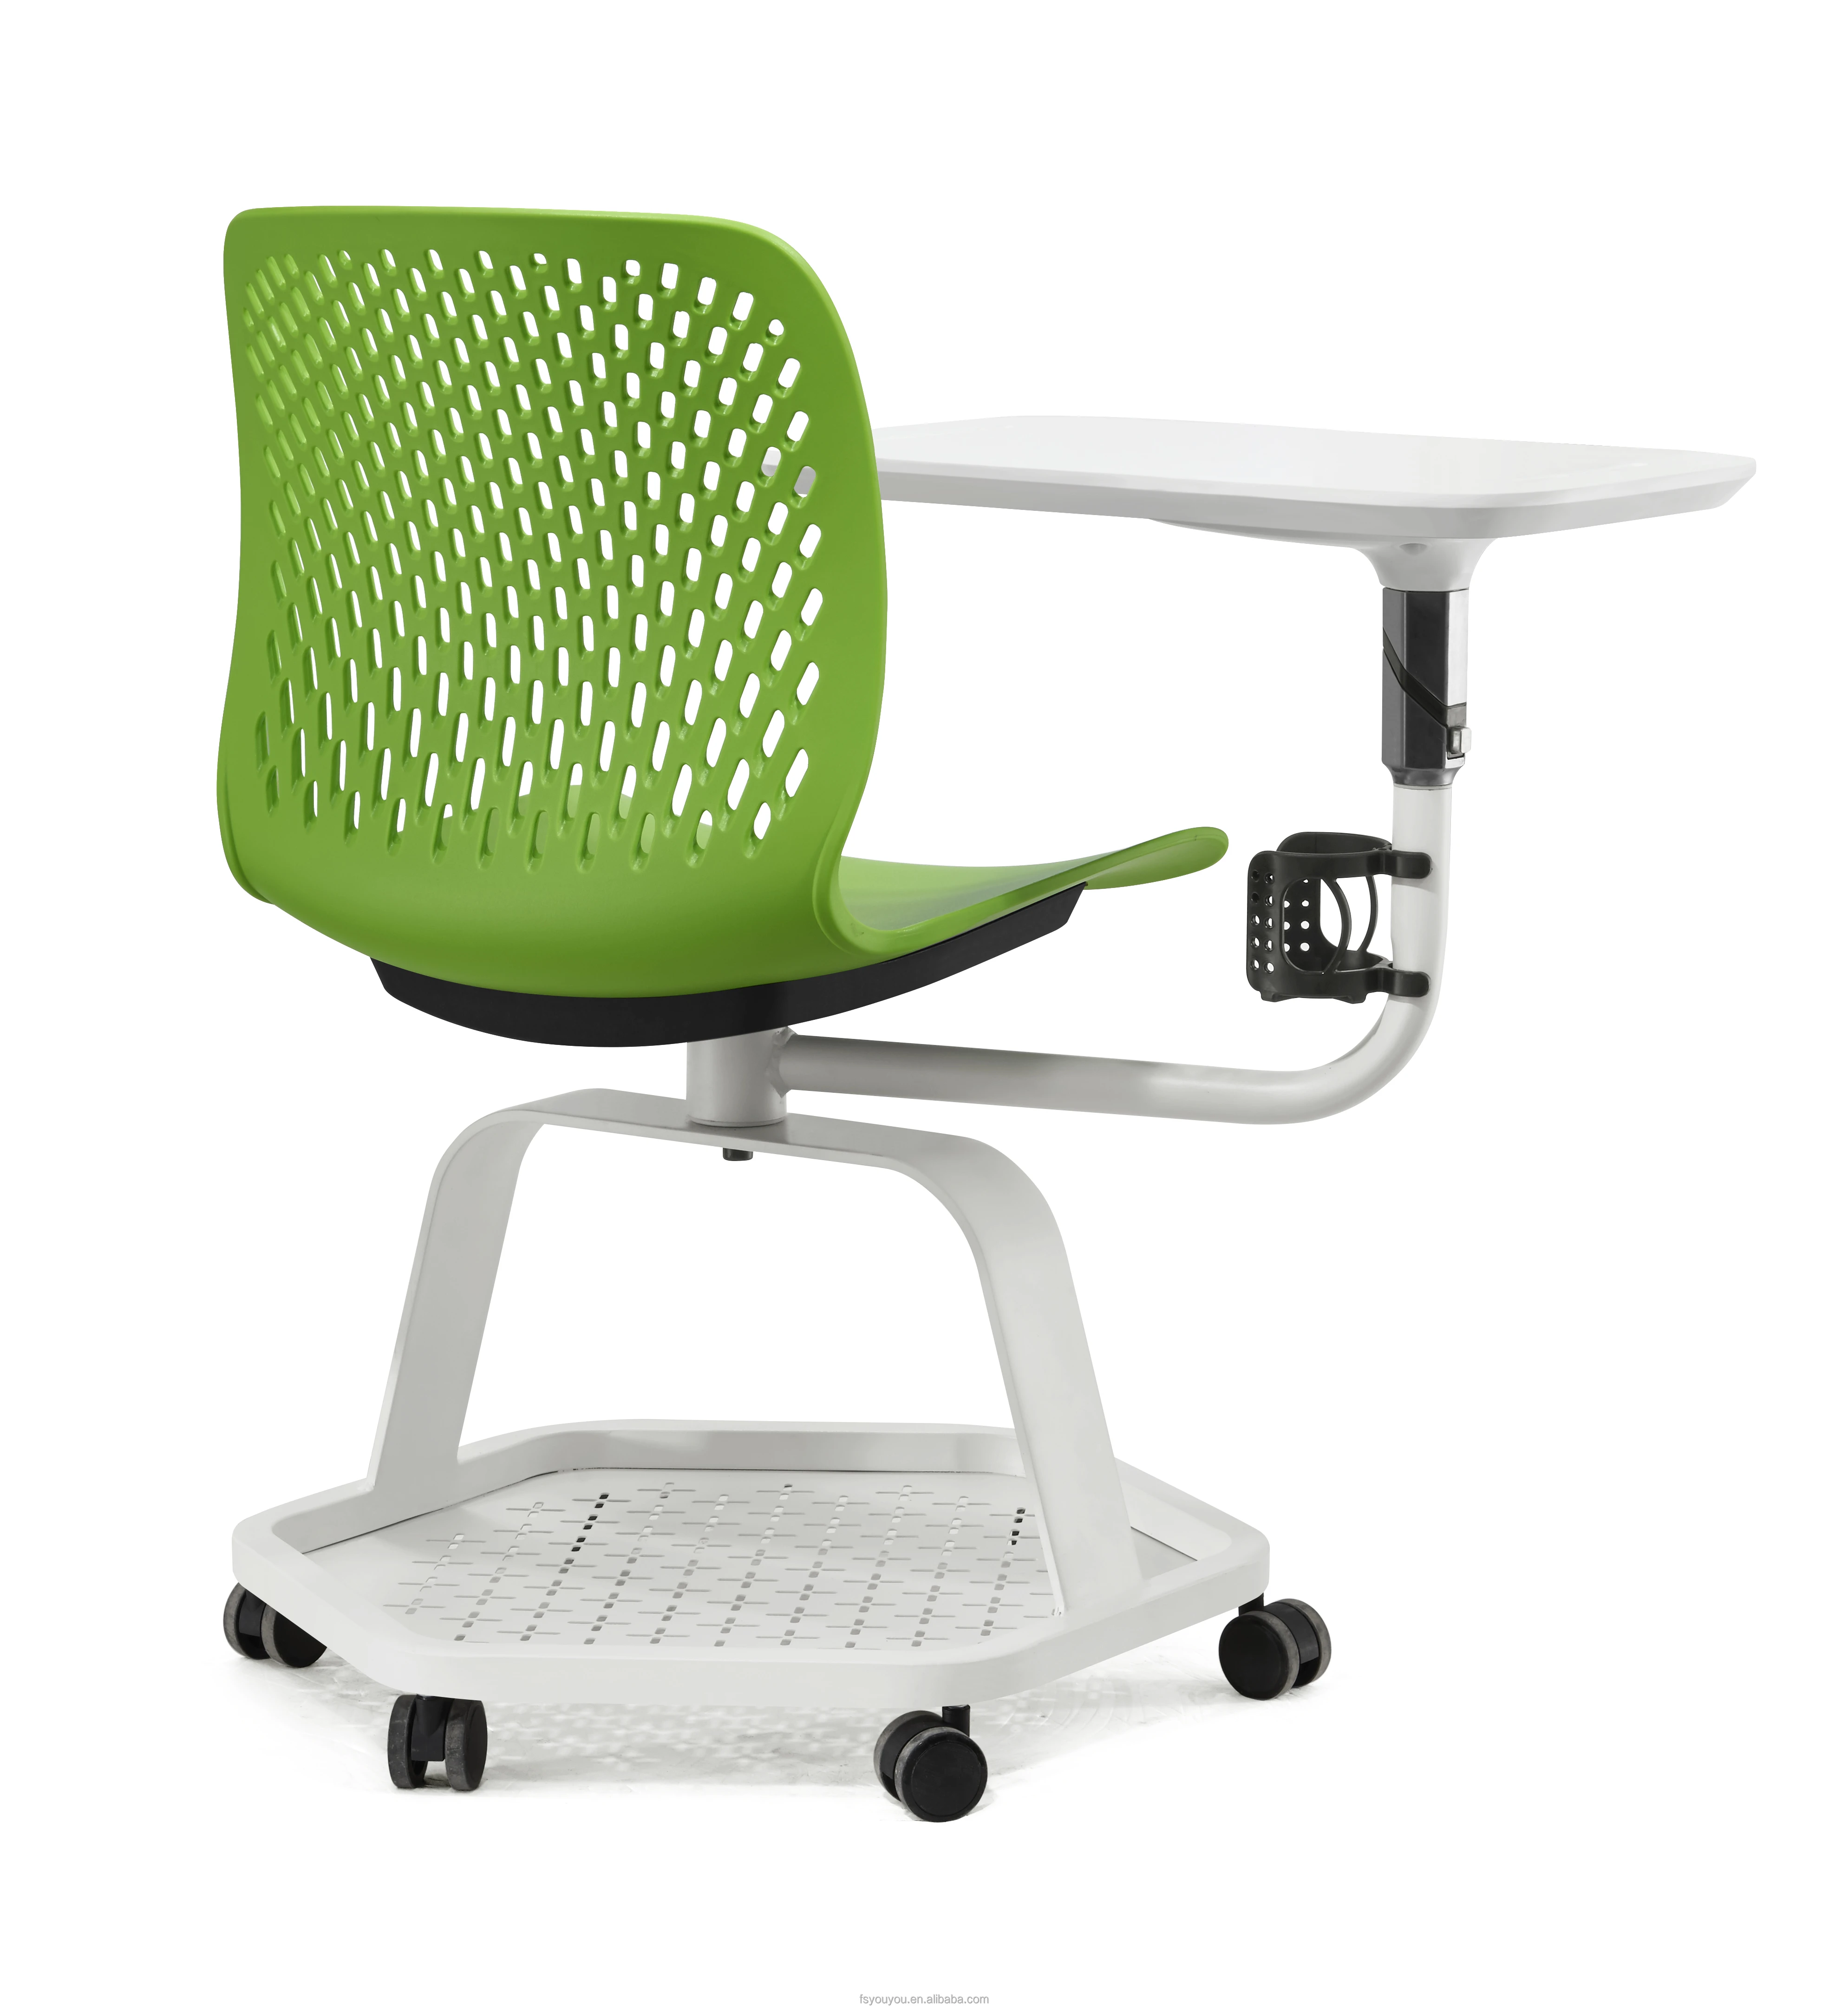 Traiinig swivel Plastic chair training office chair with castors writing pad in school